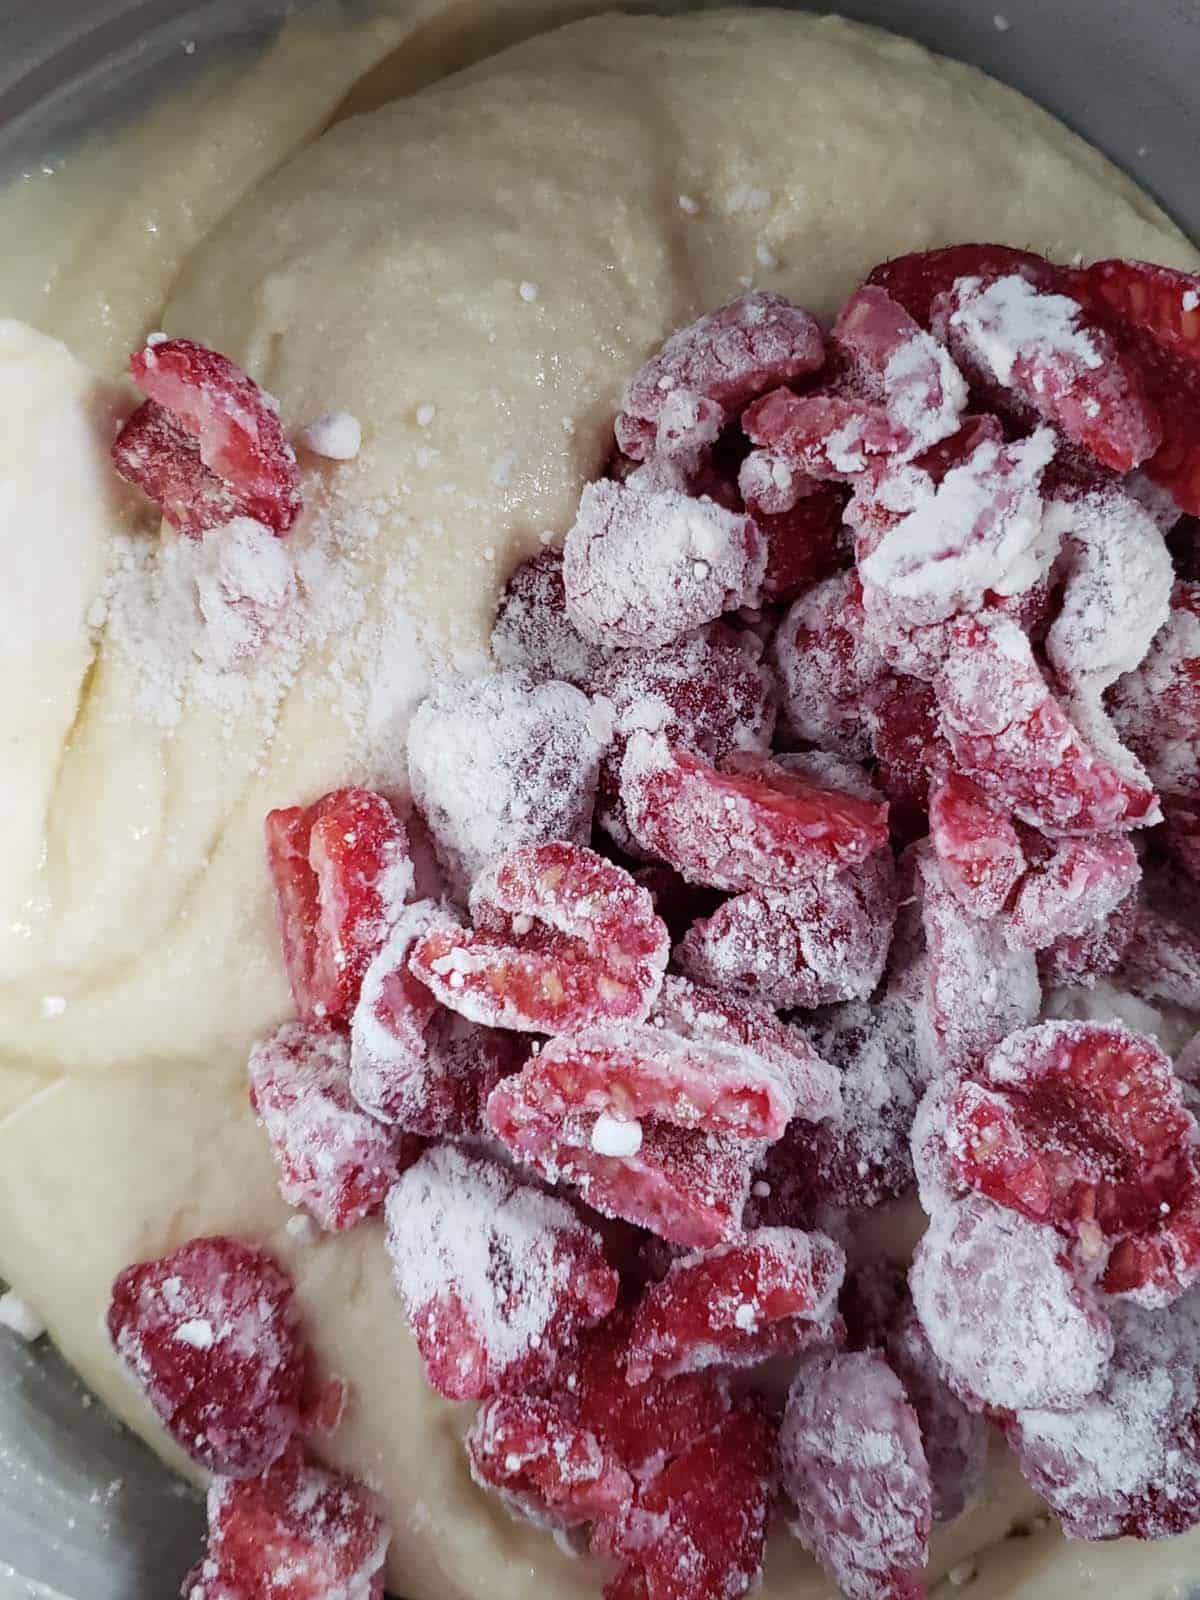 Raspberries coated in flour on top of cupcake batter.